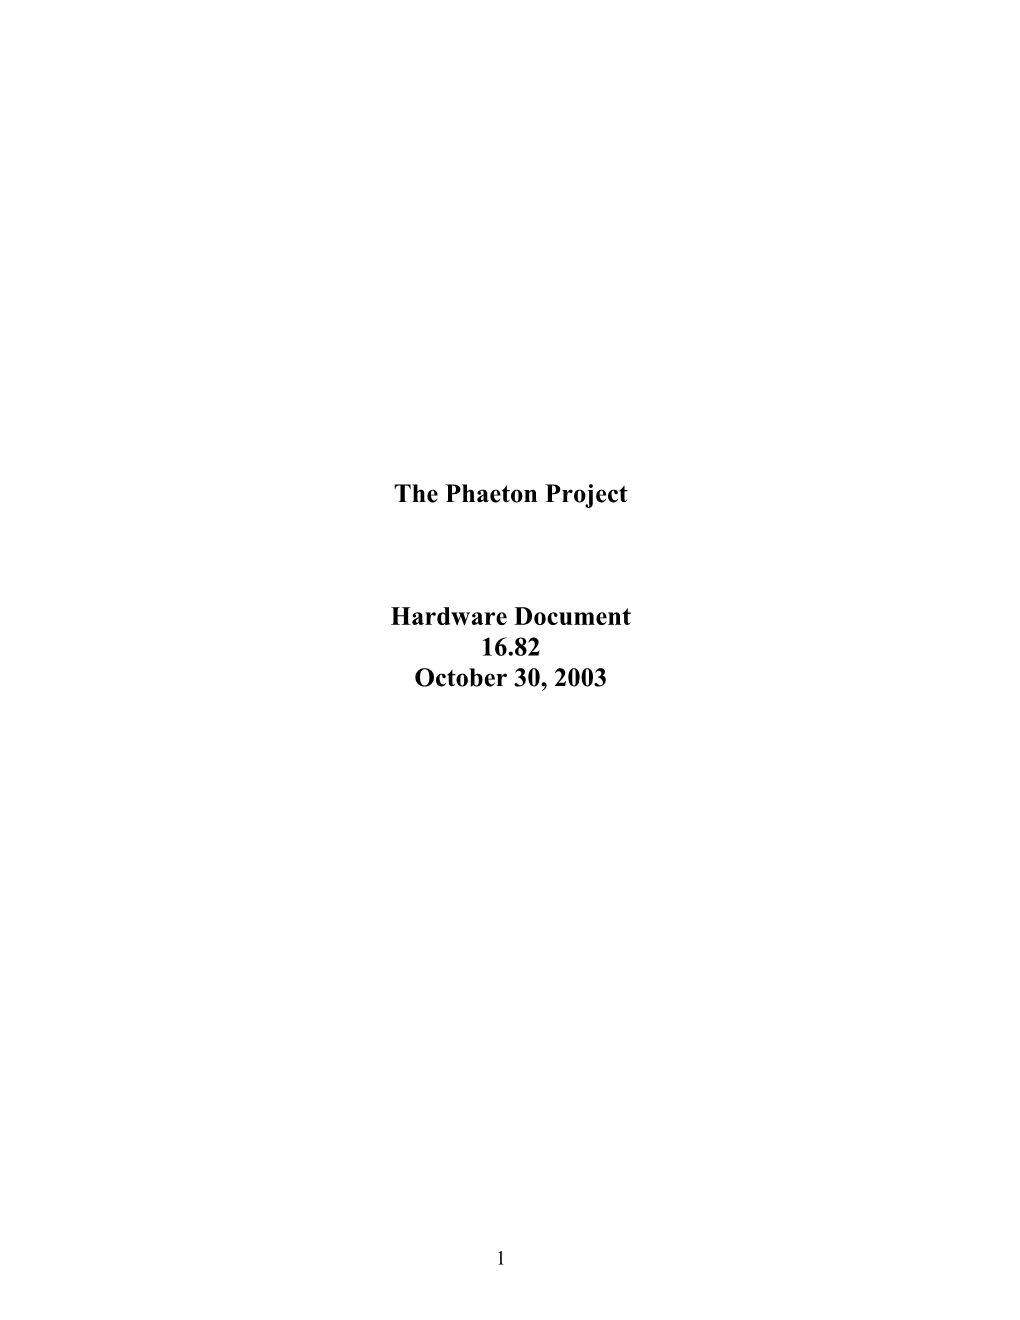 The Phaeton Project